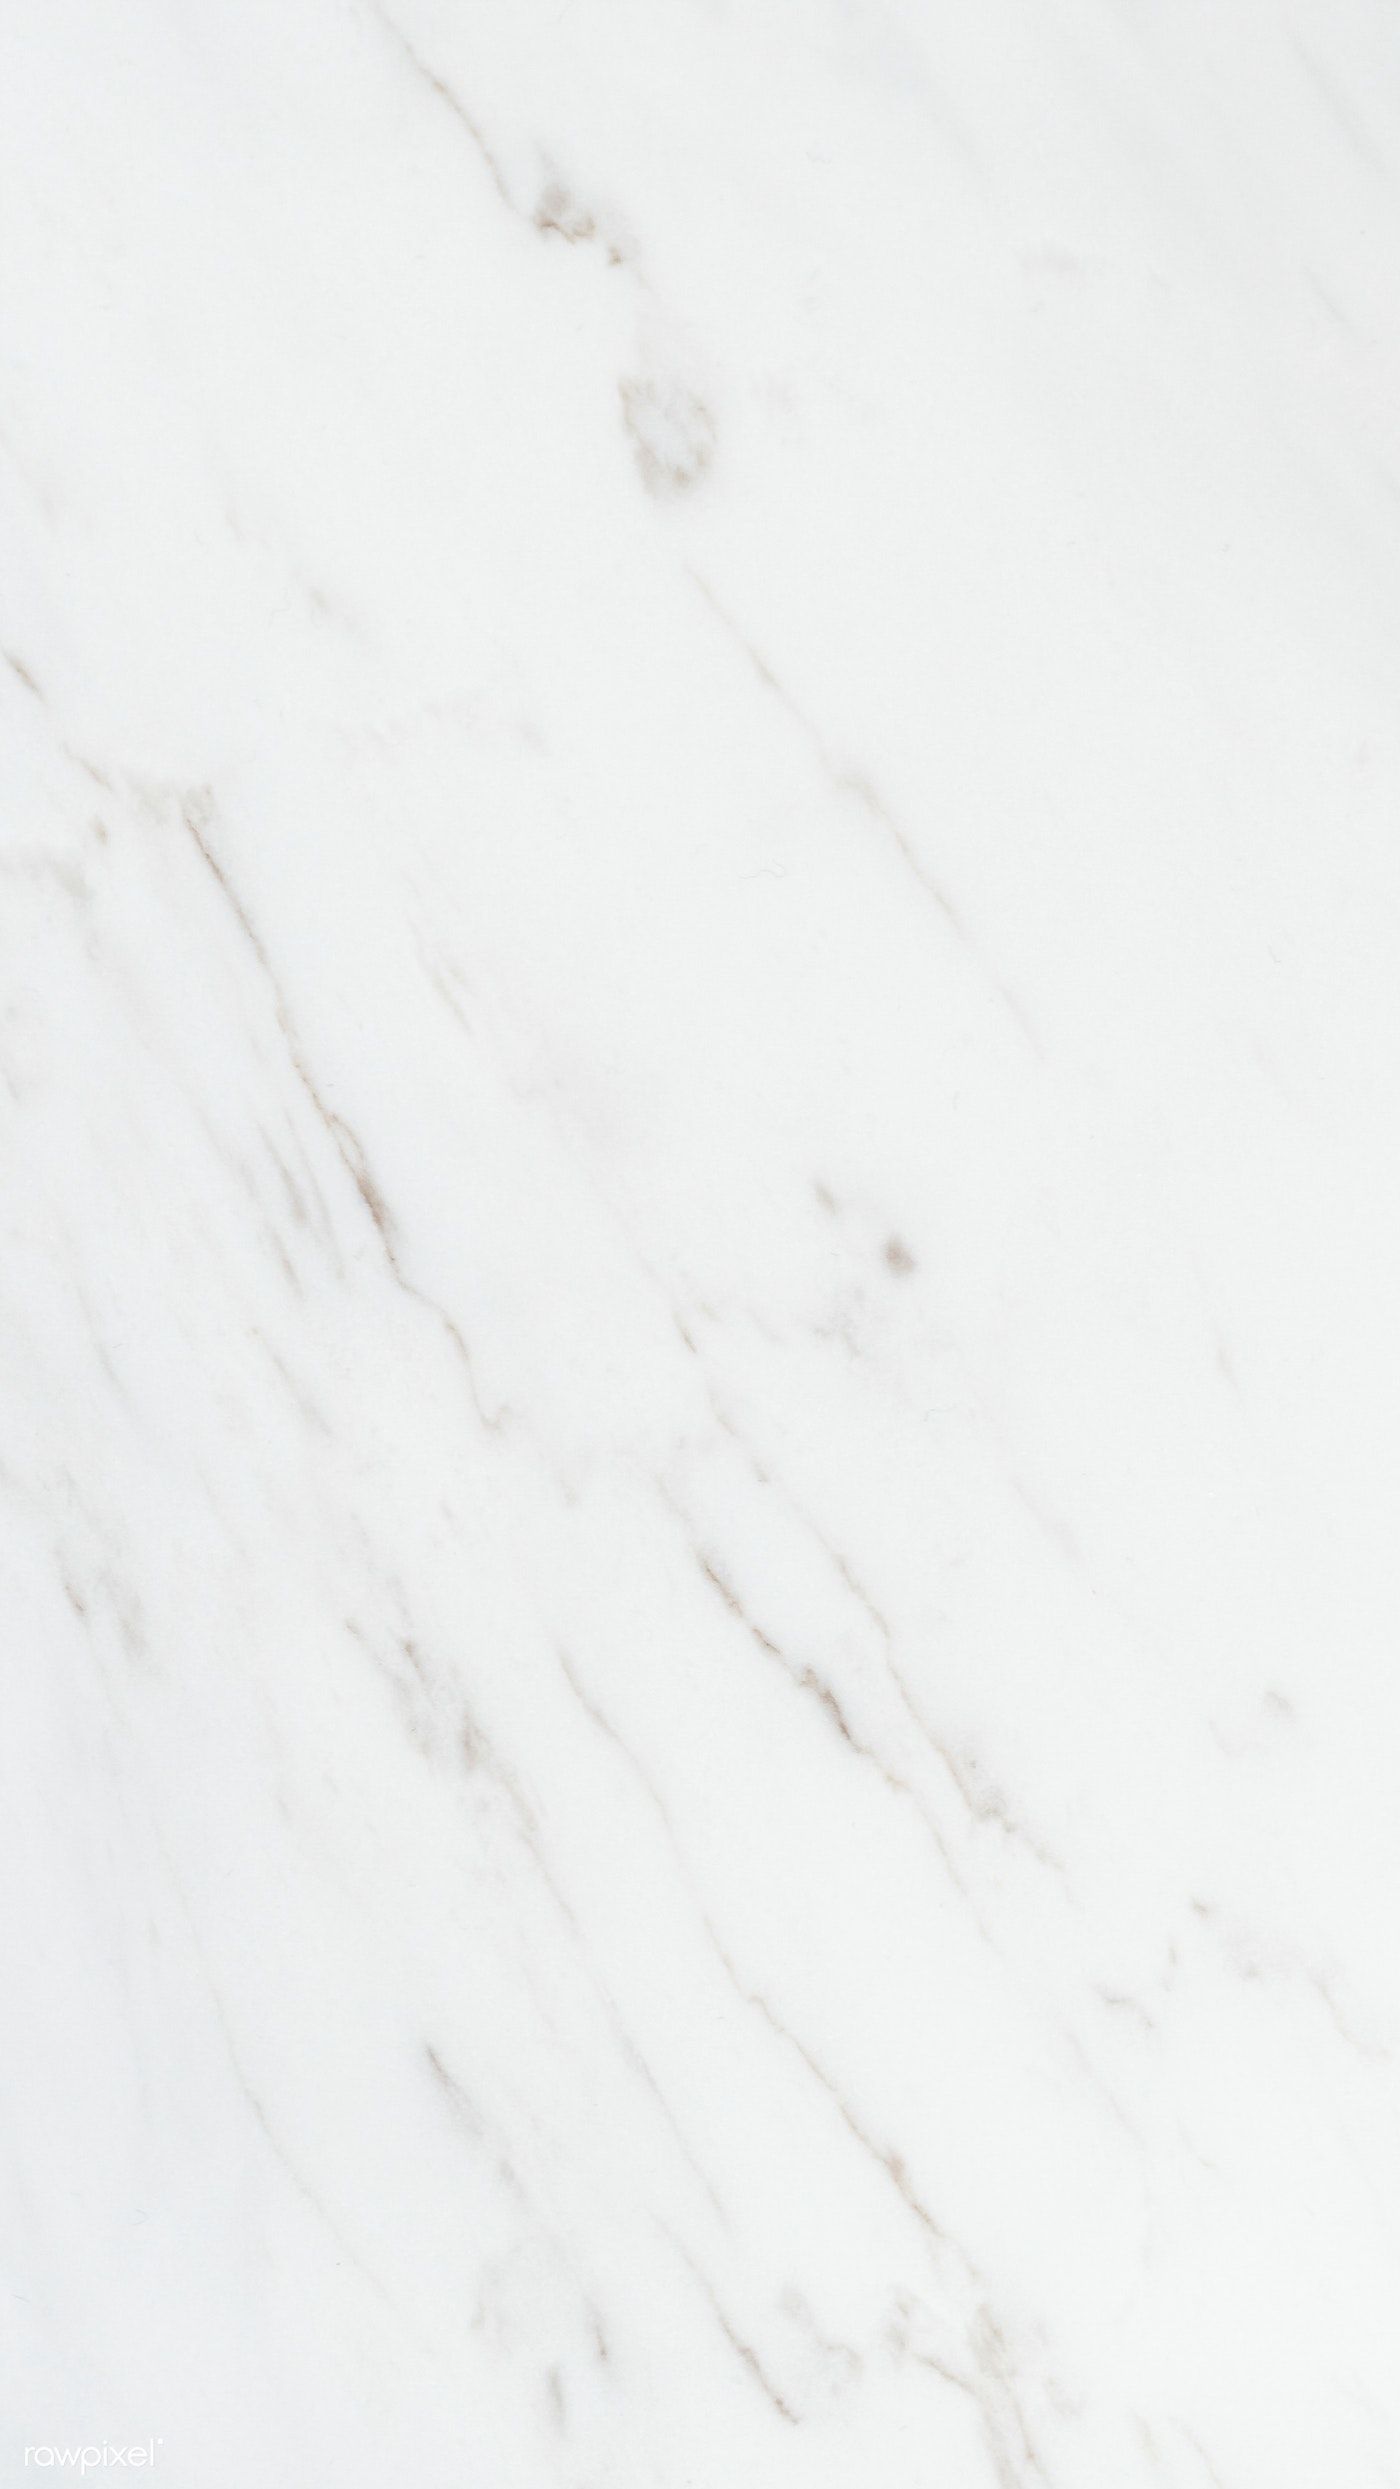 Smooth plain white marble texture mobile background / Karolin. White background wallpaper, Marble texture, White marble background